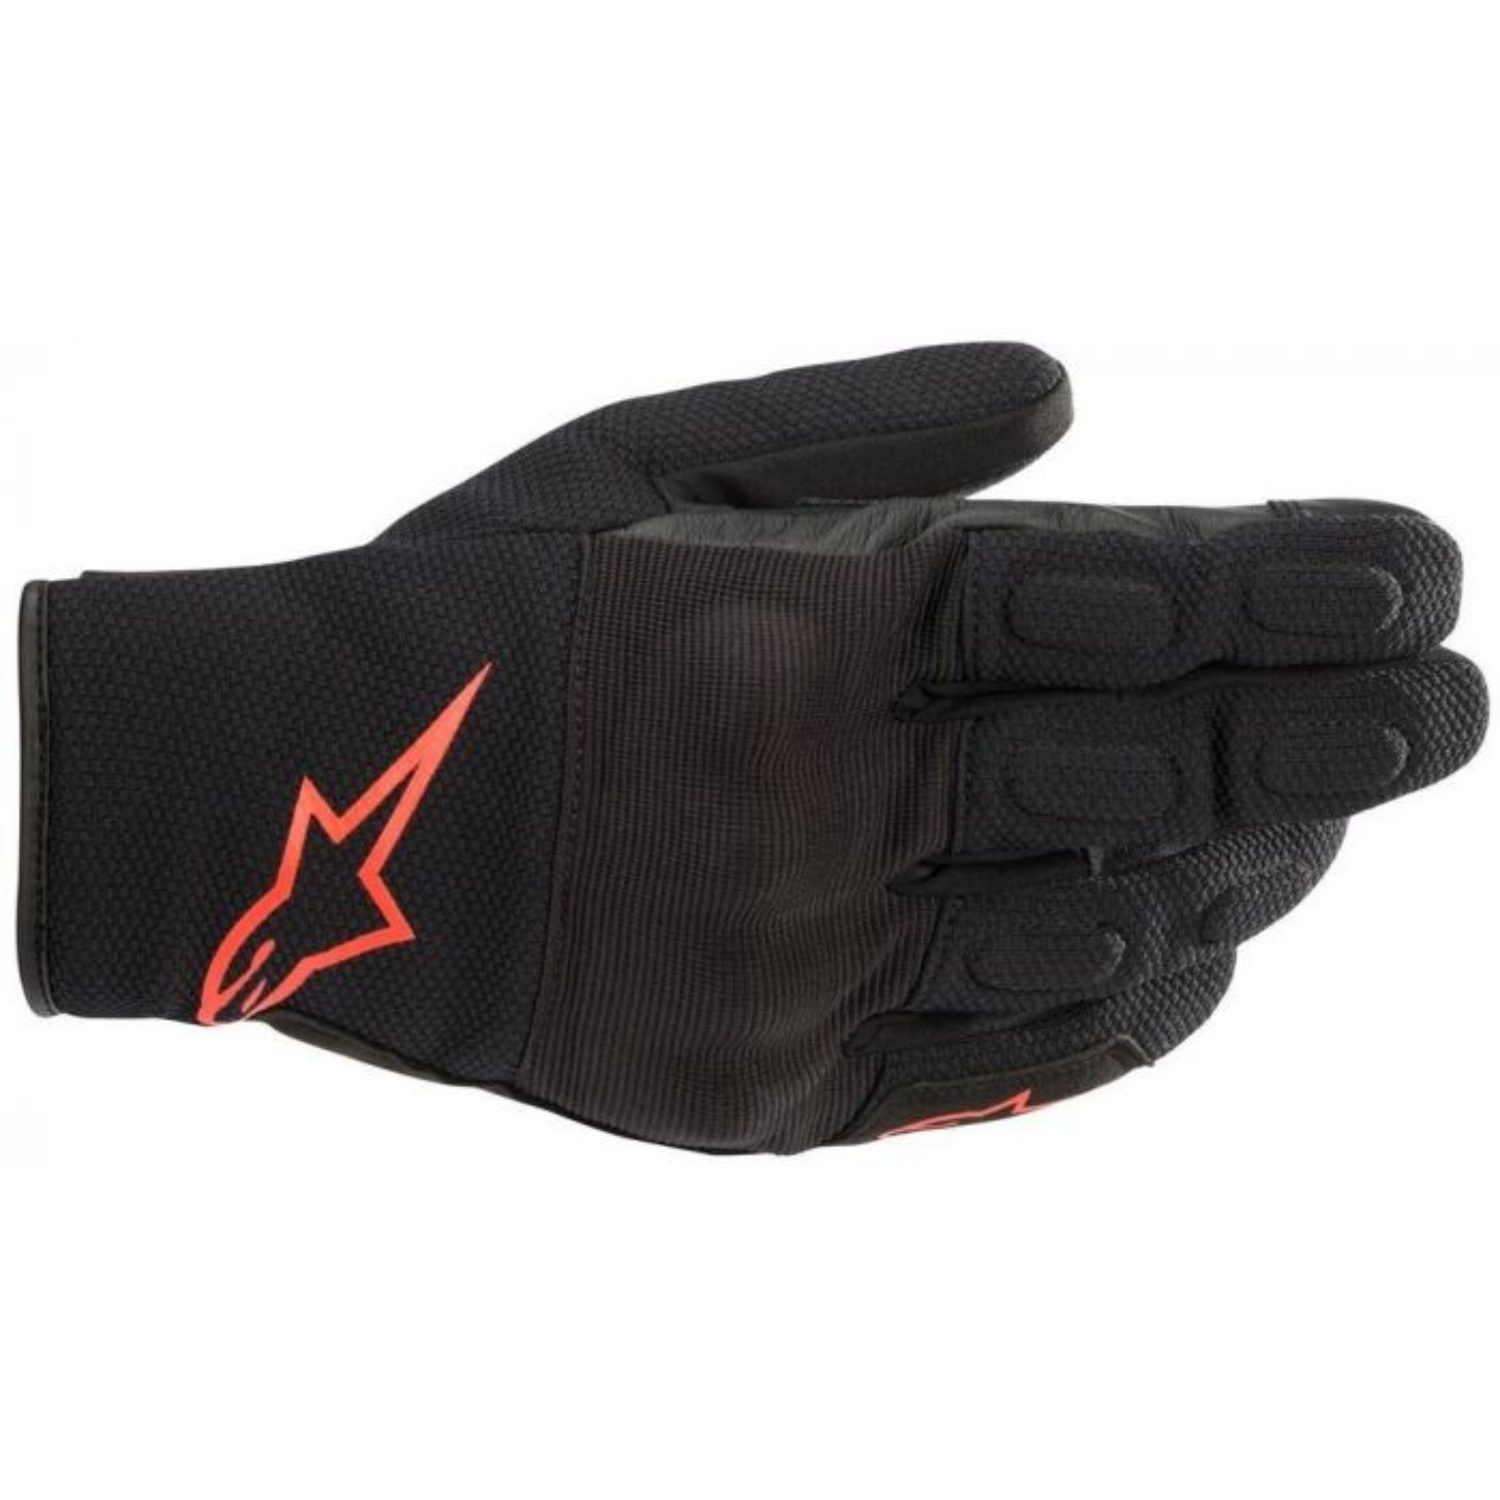 Image of Alpinestars S Max Drystar Gloves Black Red Fluo Size M ID 8059175098826